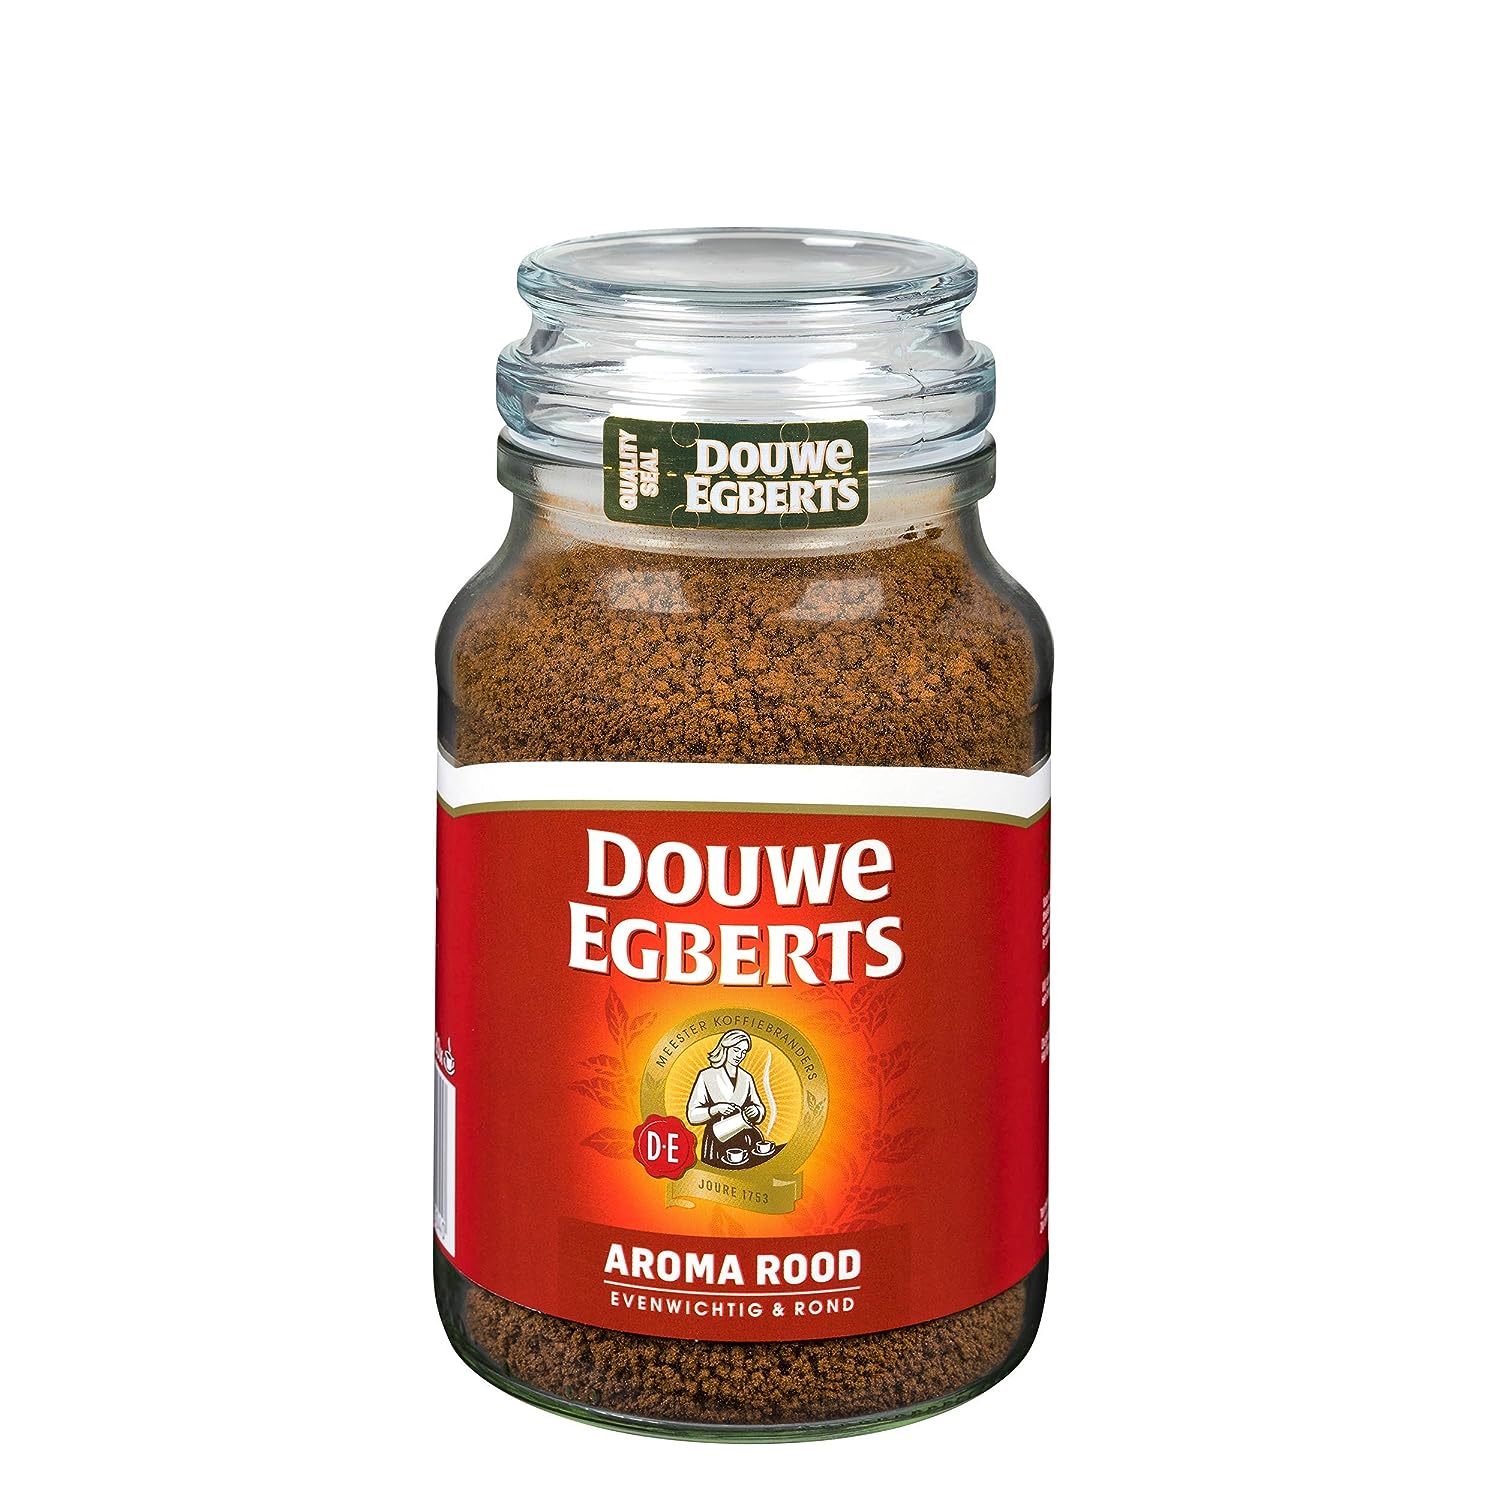 Douwe Egberts Aroma Rood Instant Coffee,  Jar